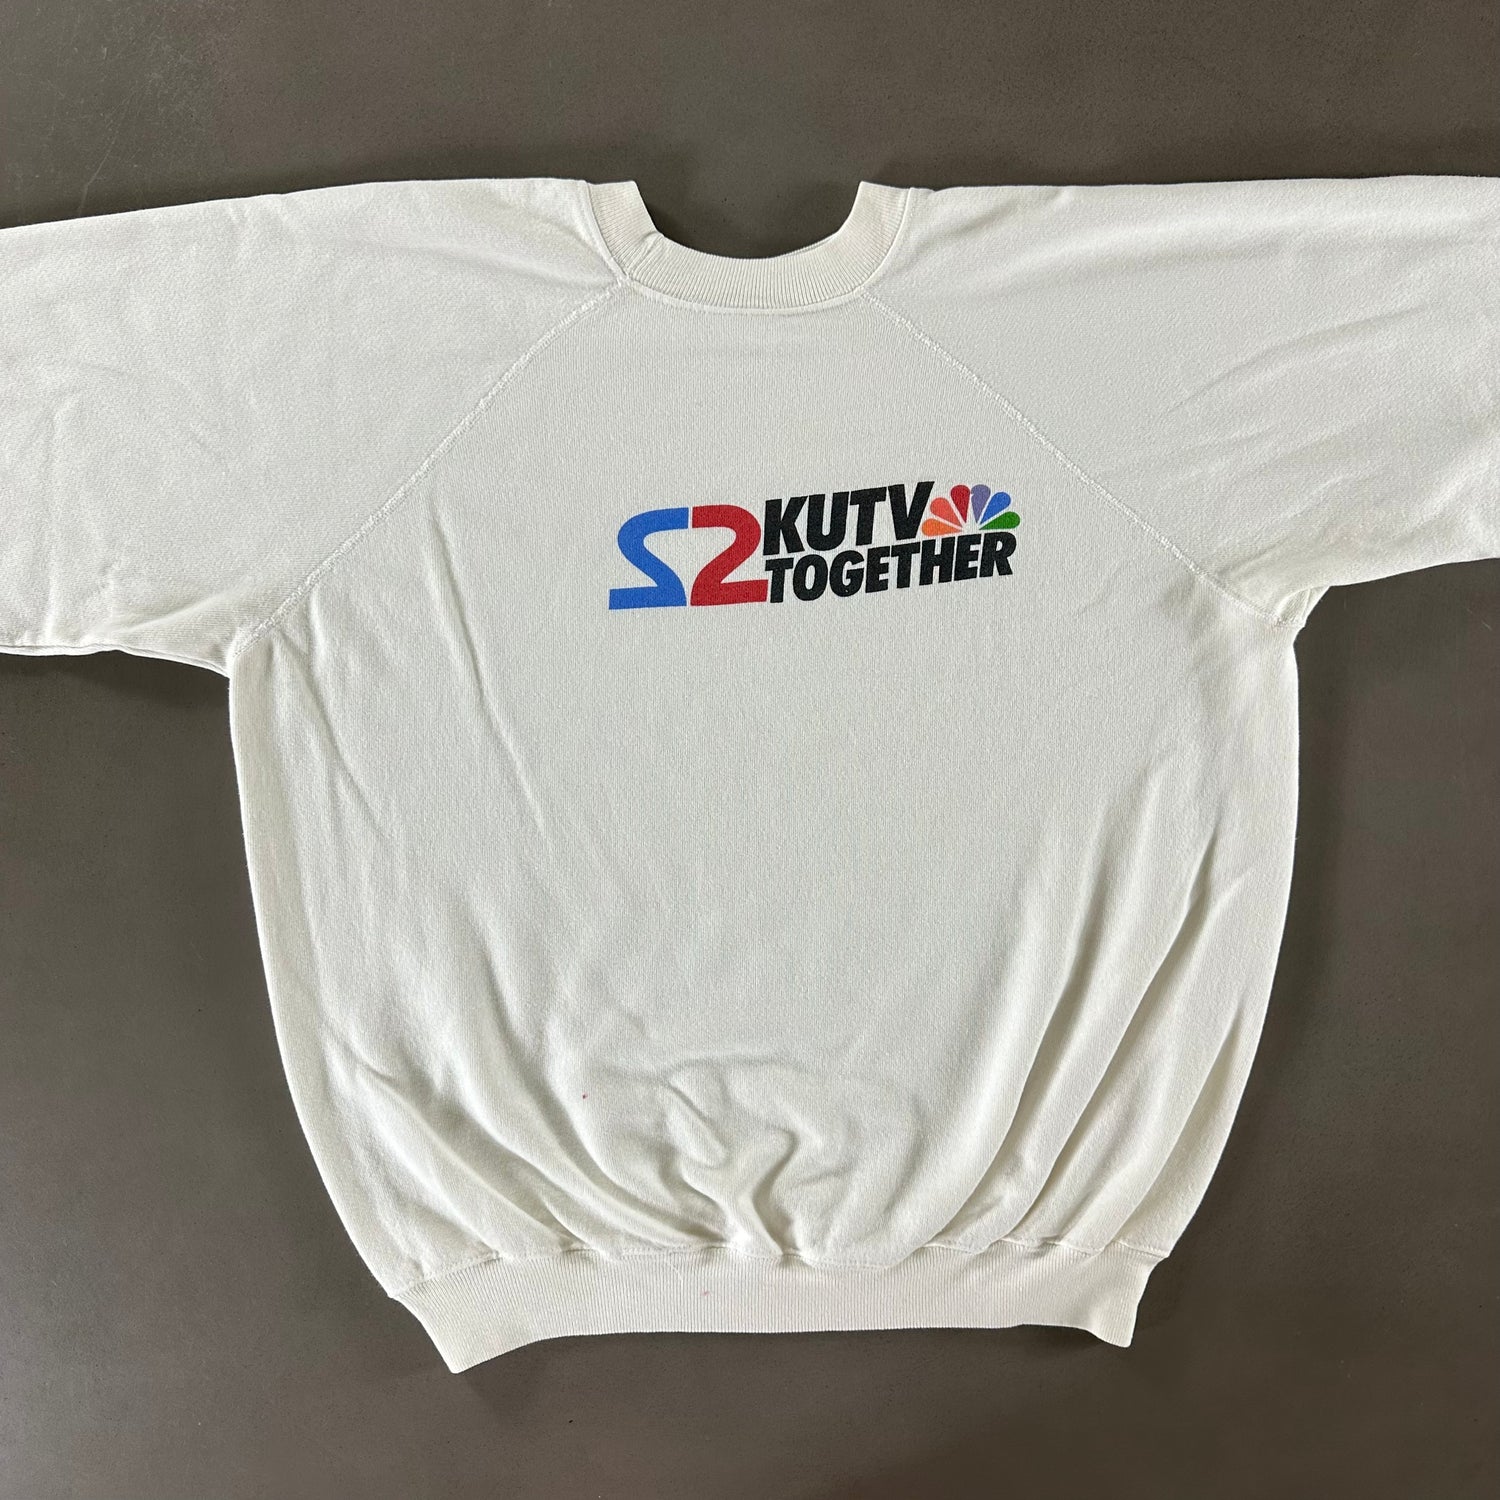 Vintage 1990s NBC Sweatshirt size XL